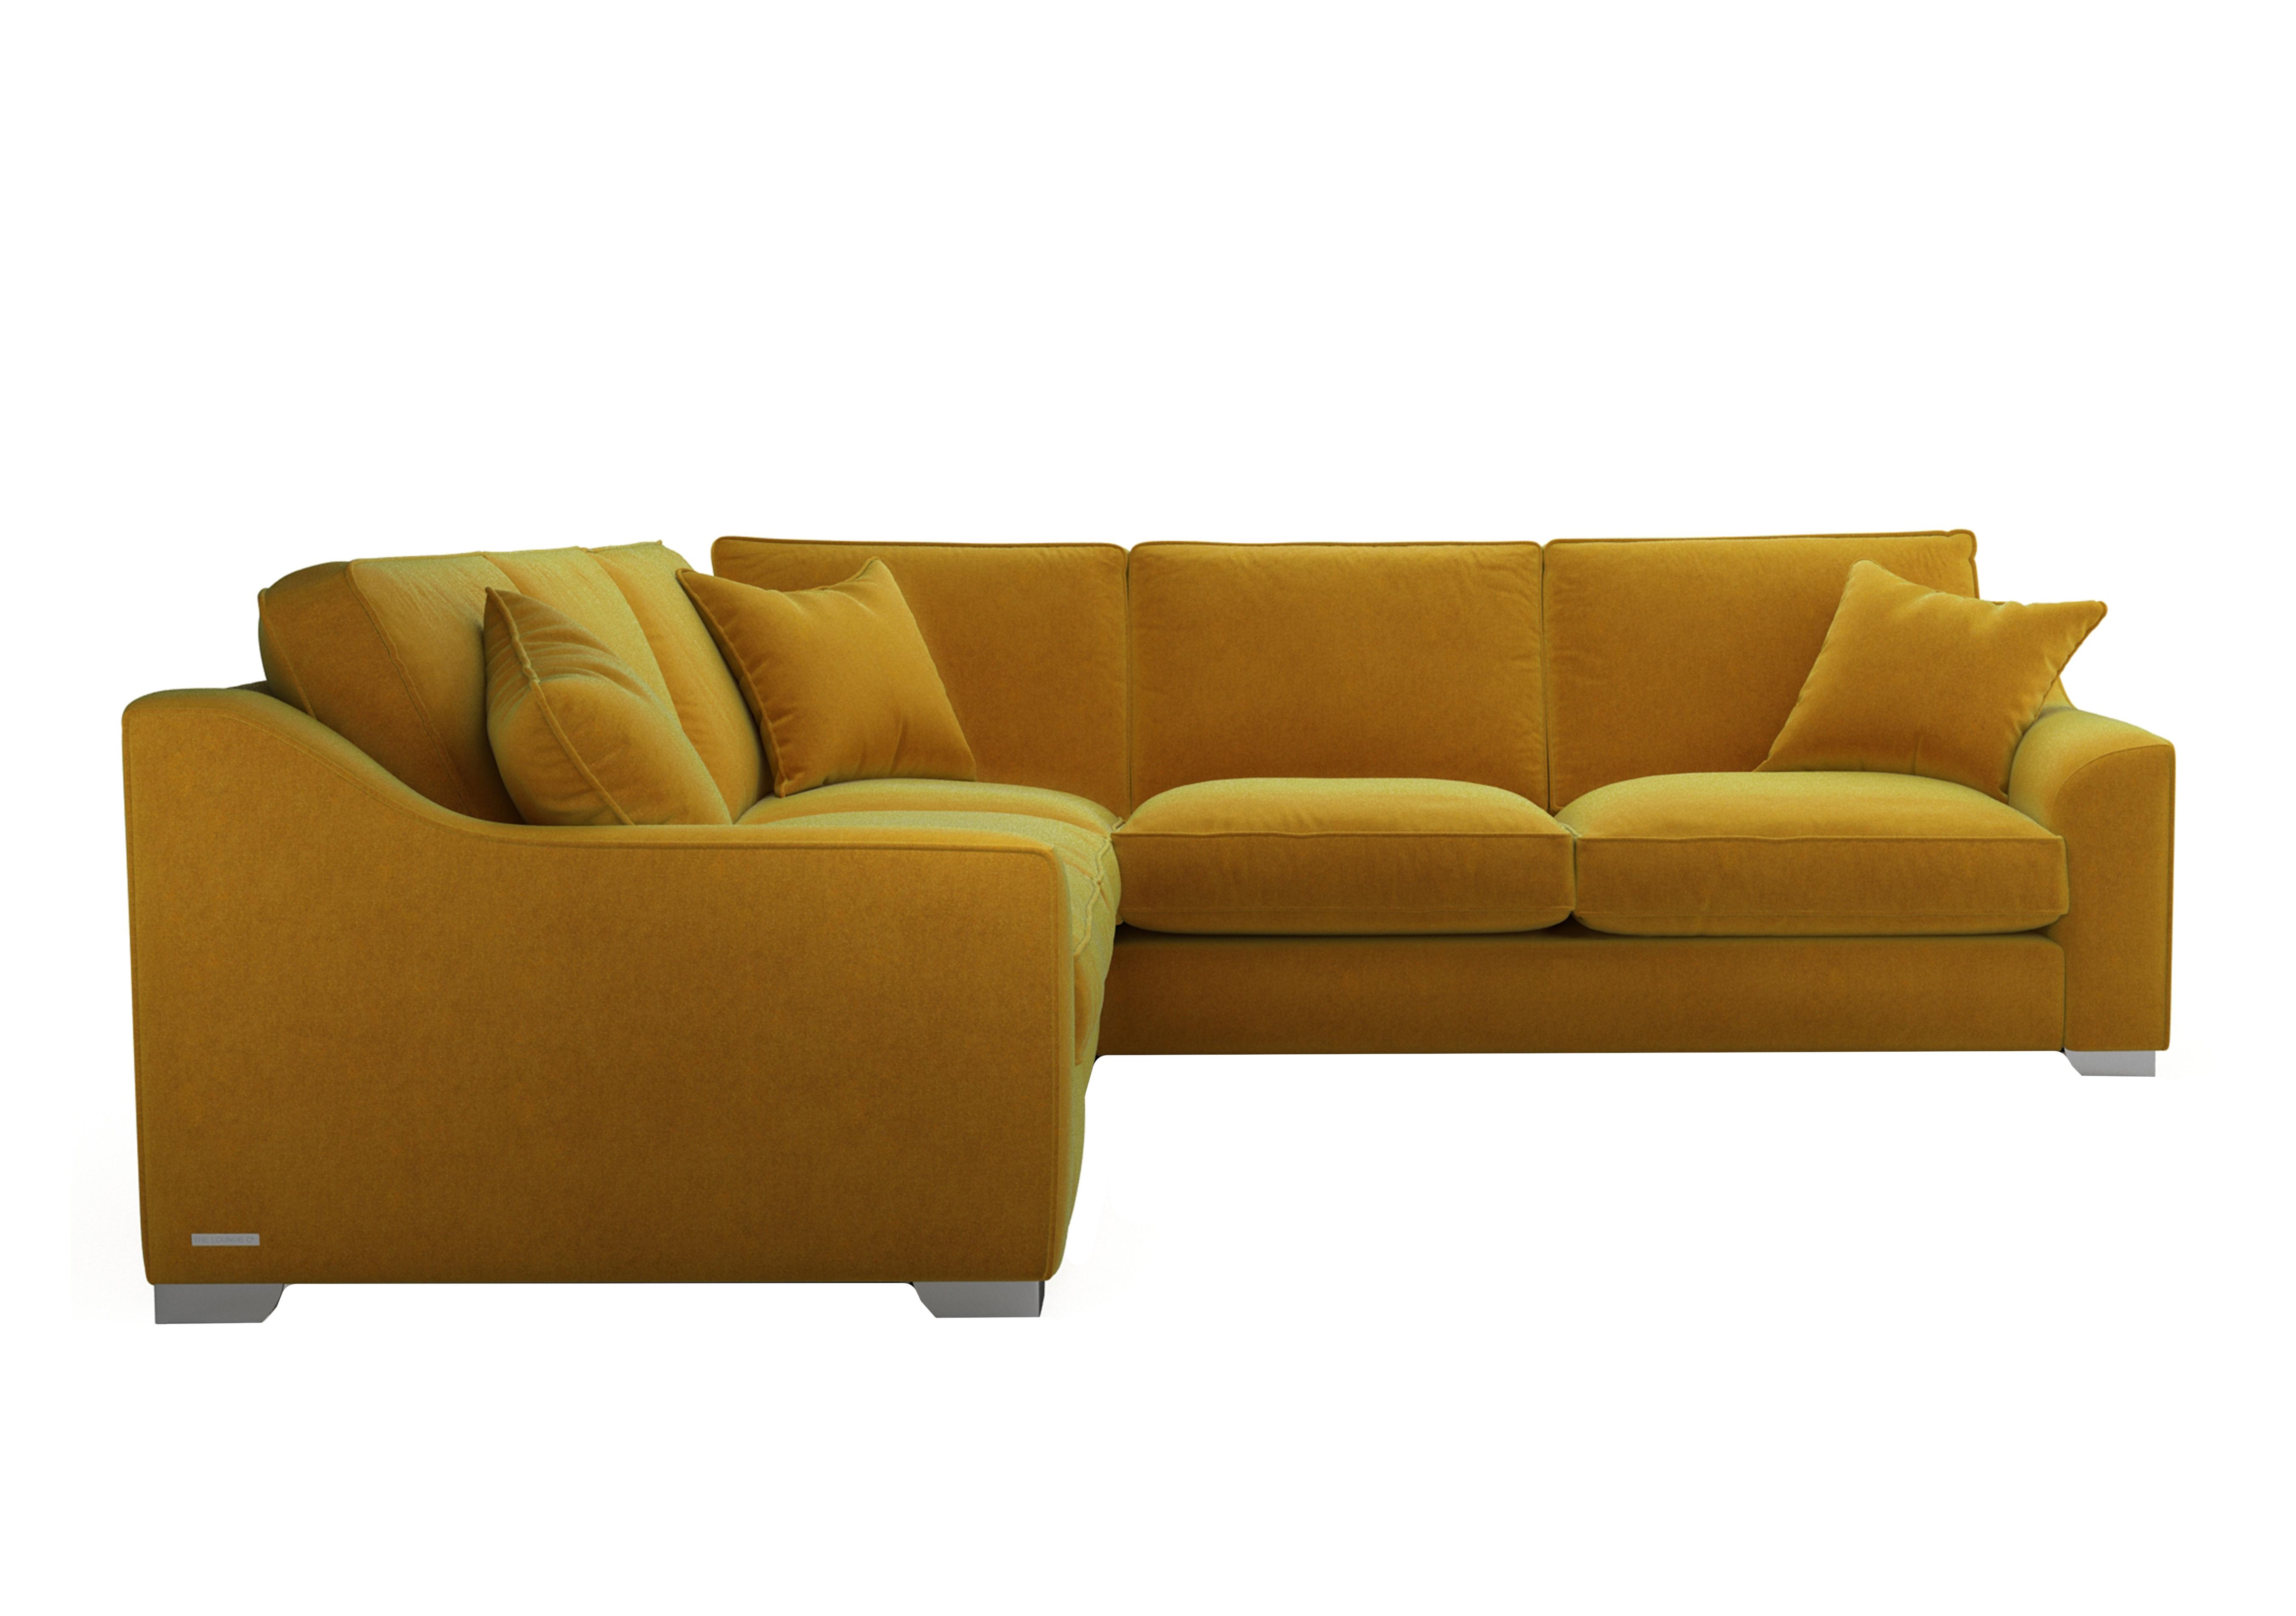 Isobel Large Fabric Corner Sofa in Gol204 Golden Spice Ch Ft on Furniture Village